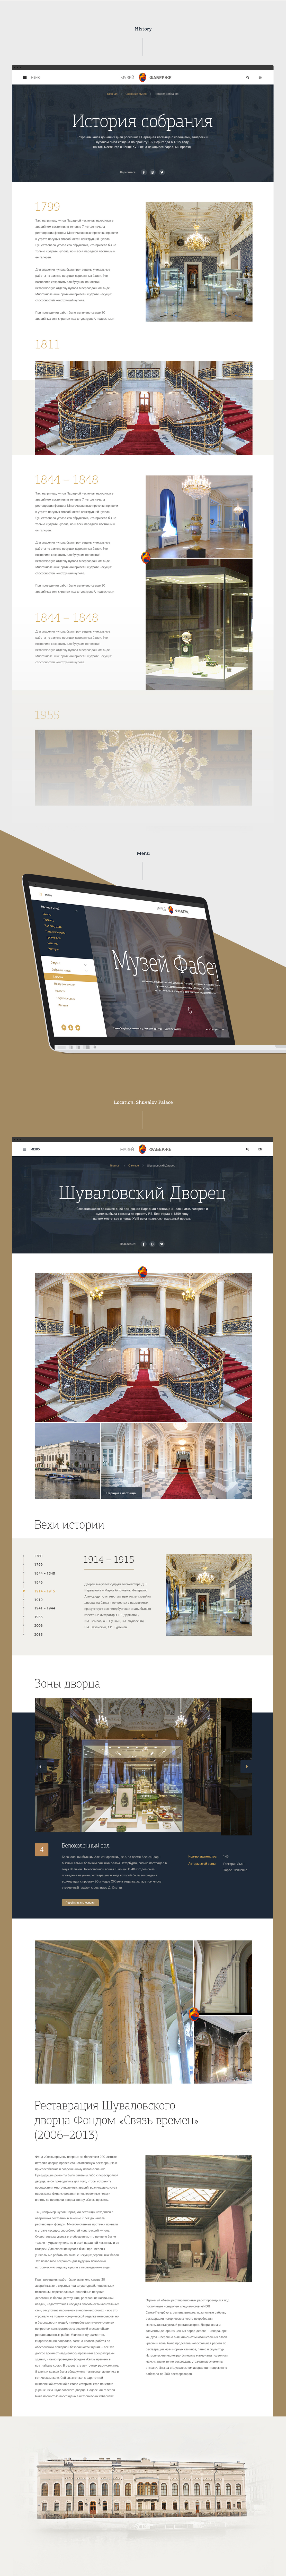 Faberge museum ru basovdesign ukraine Website Webdesign Shuvalov Collection masterpiece